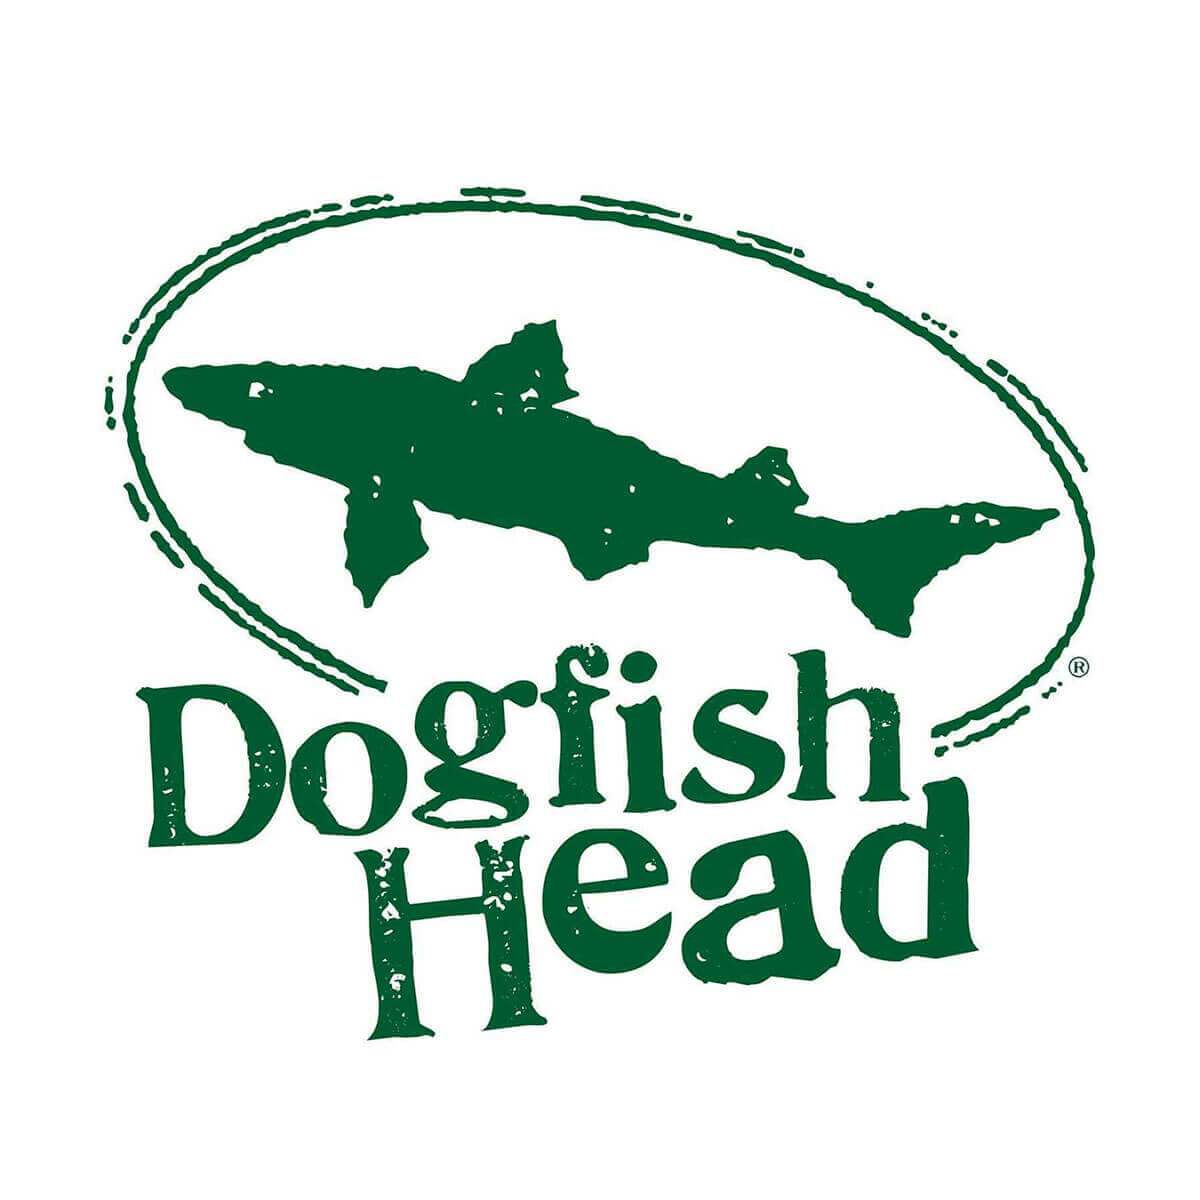 Dogfish head green logo